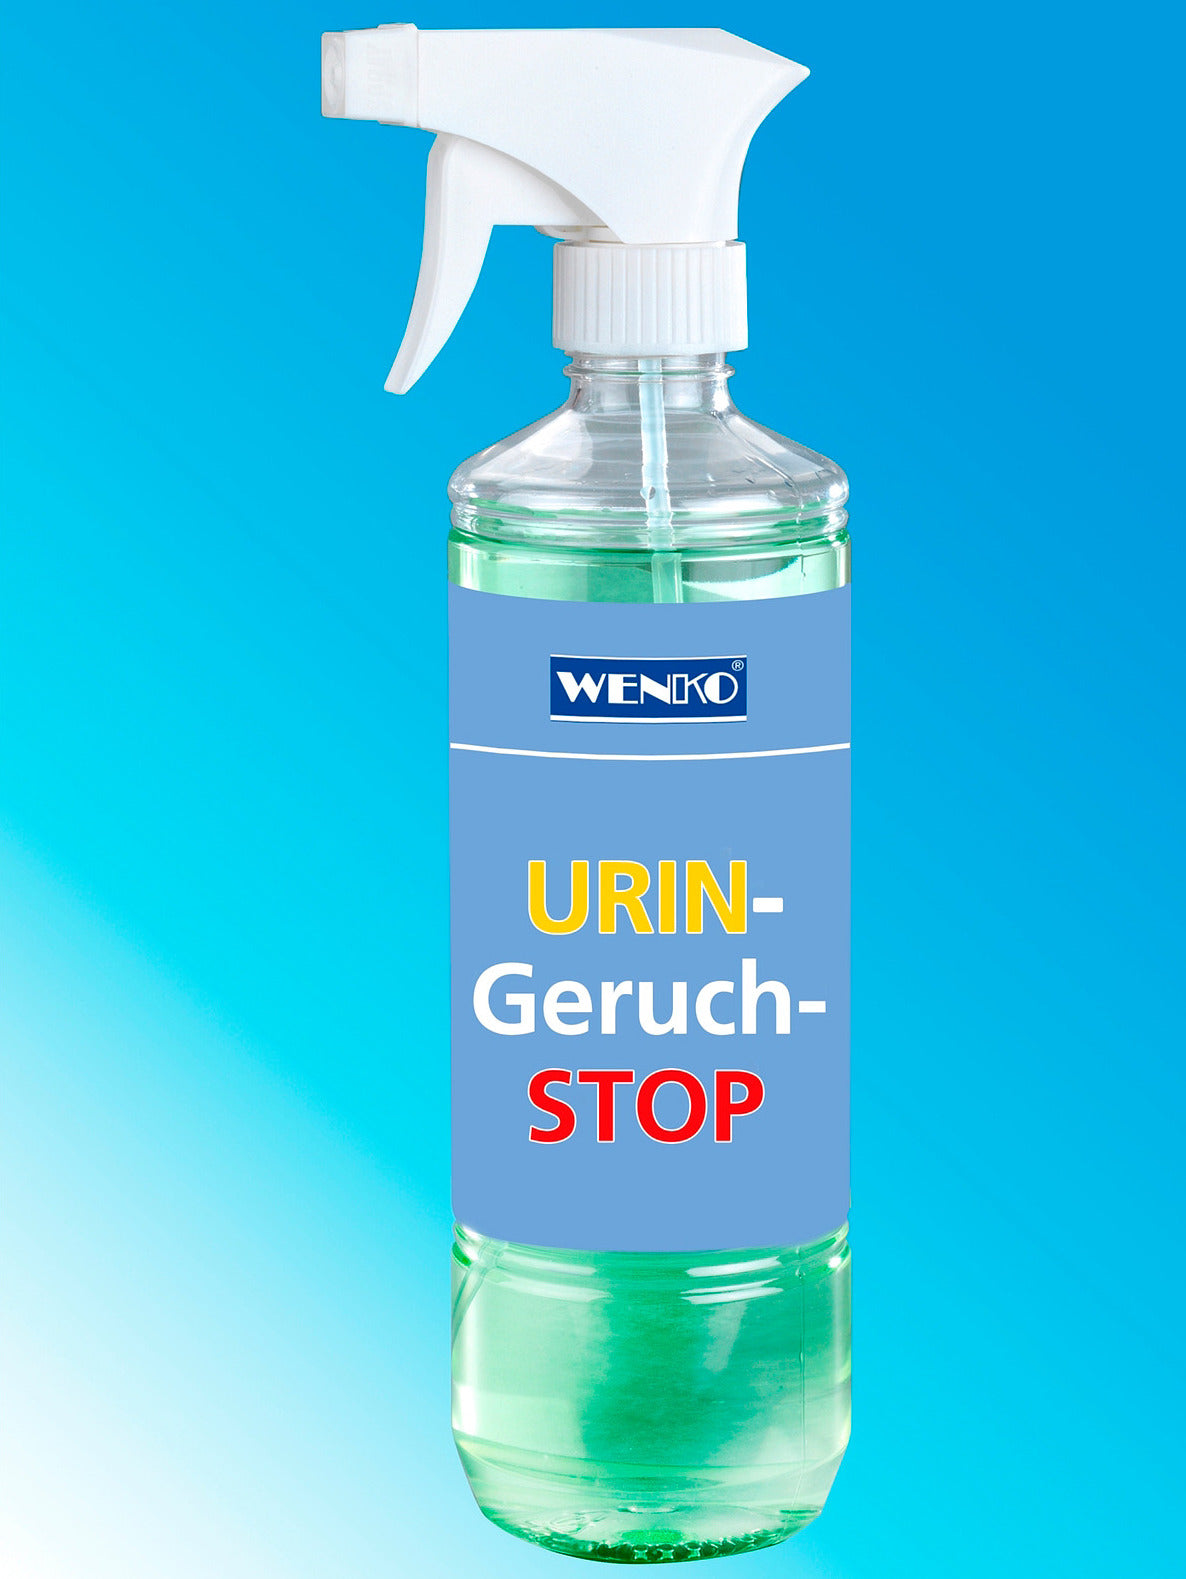 Urin-Geruch-Stop